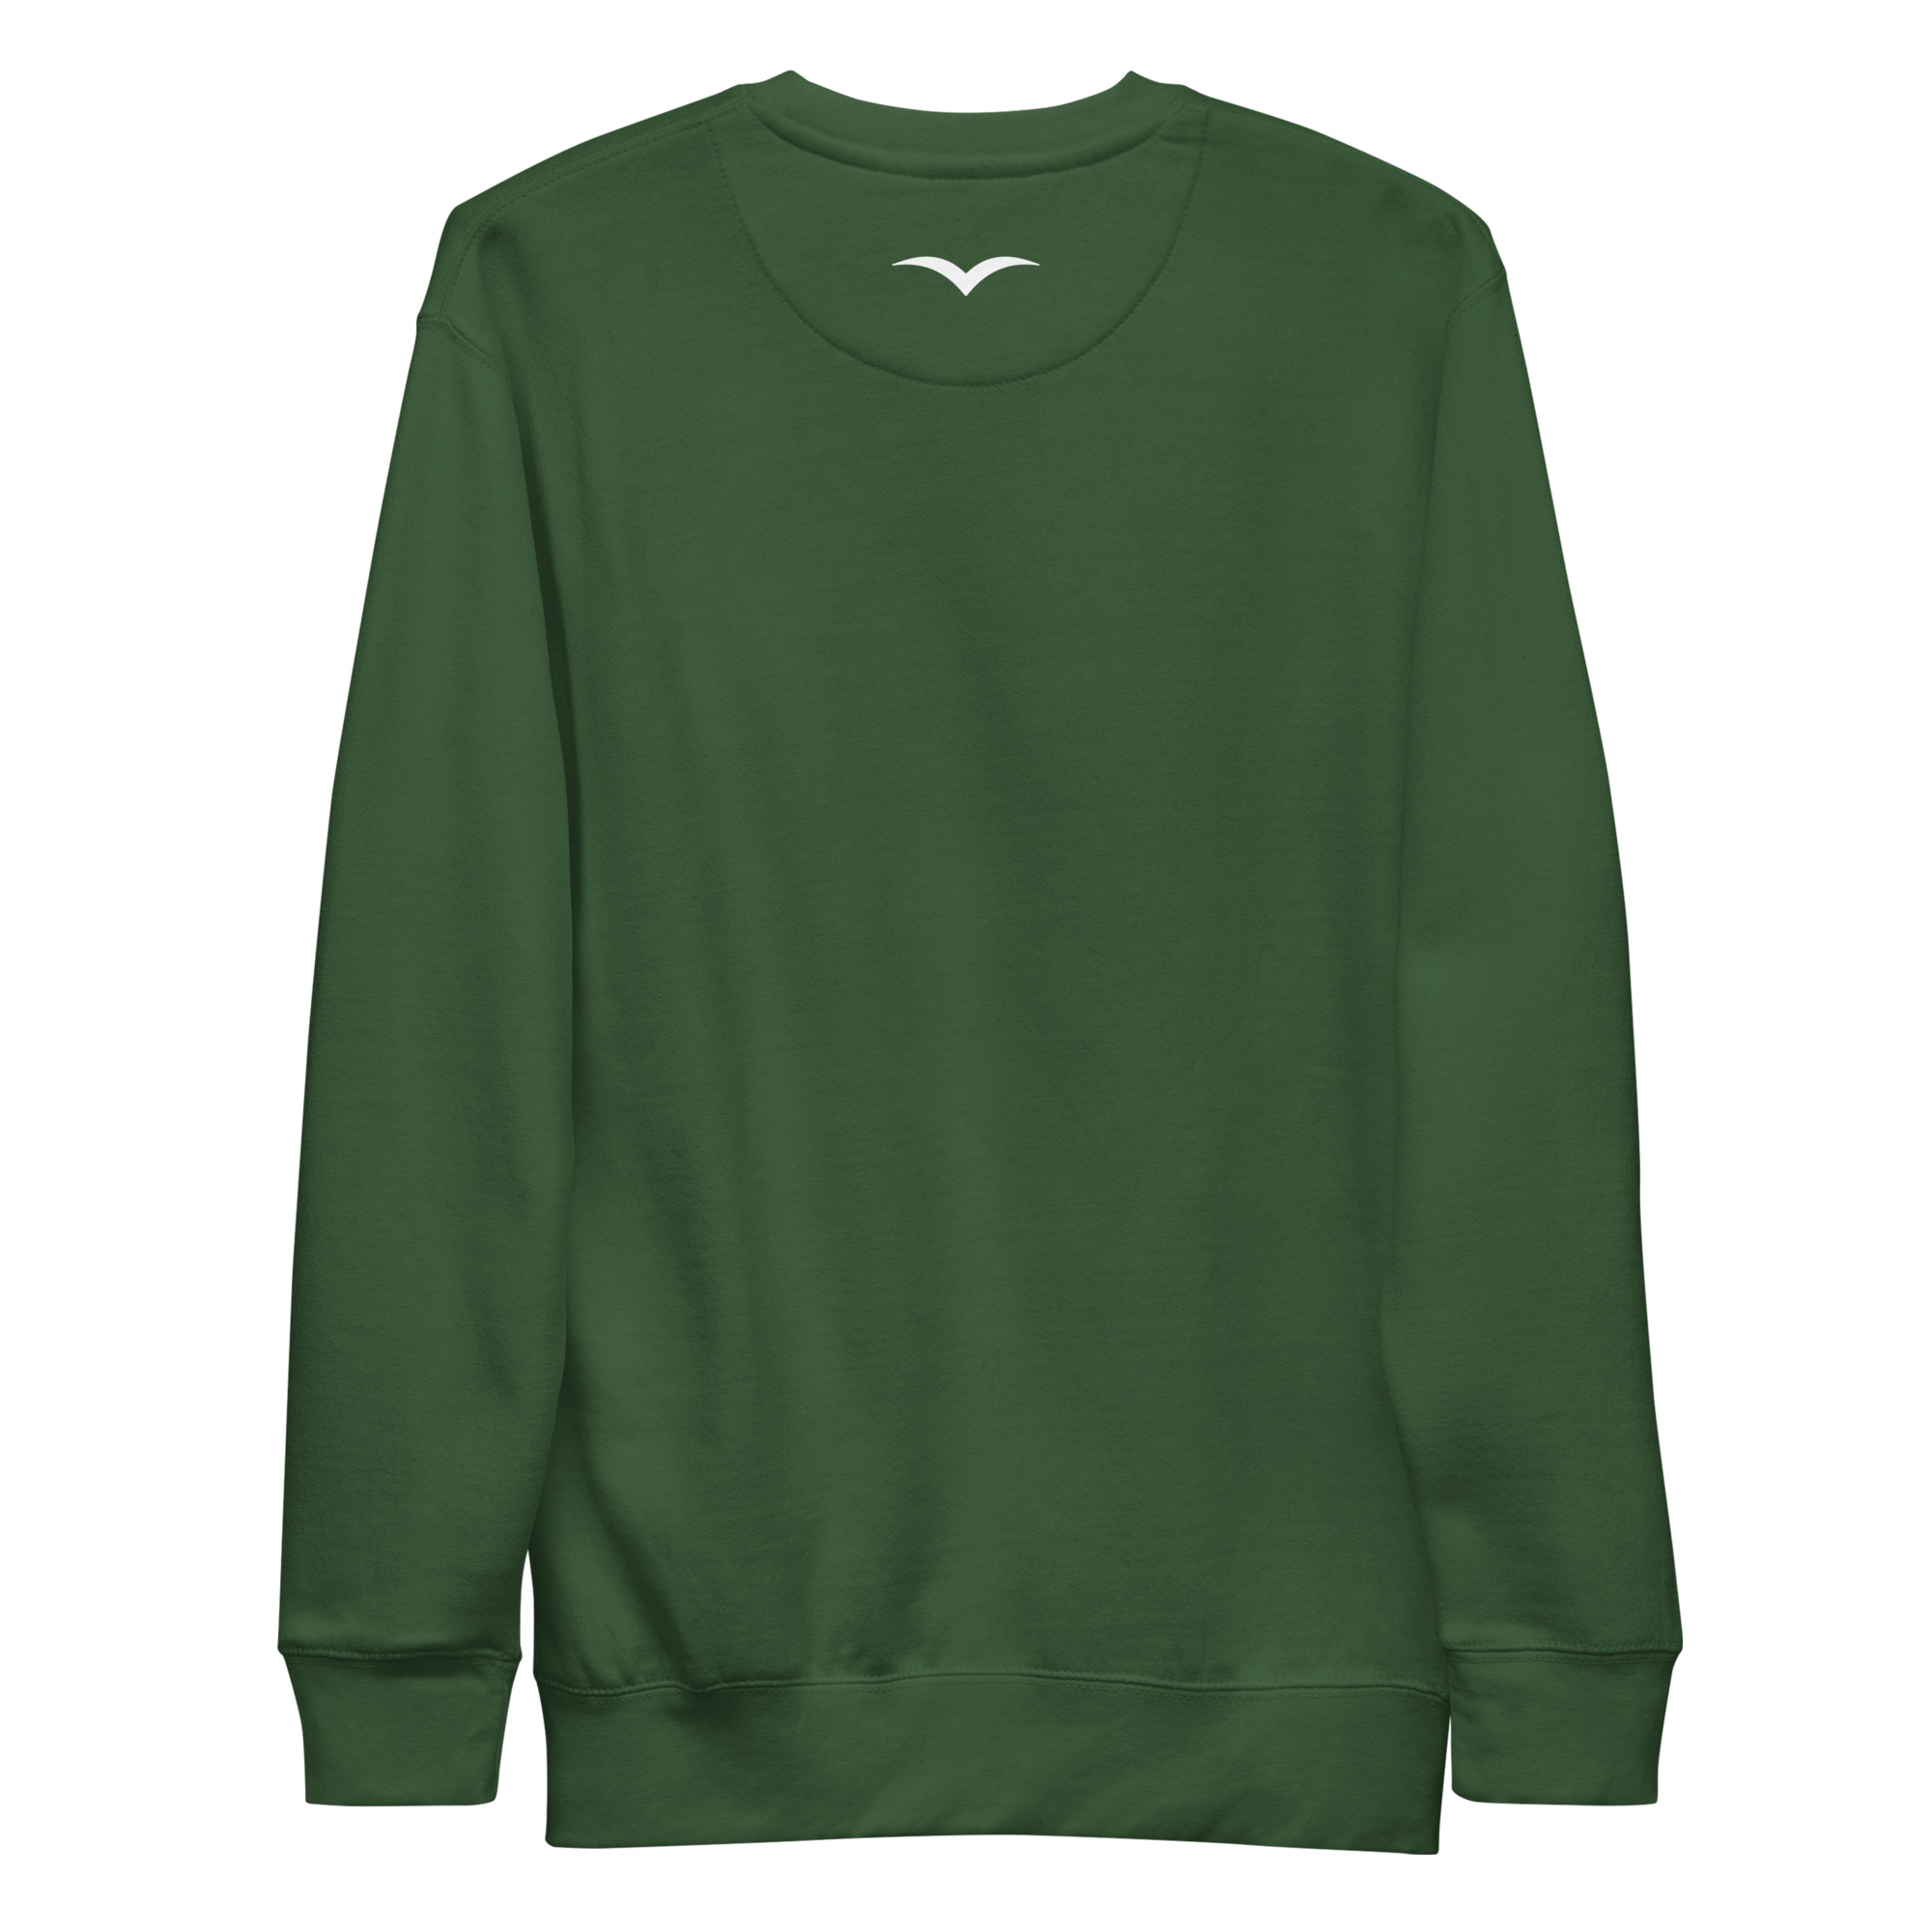 unisex-premium-sweatshirt-forest-green-back-64136bbe27a02.jpg